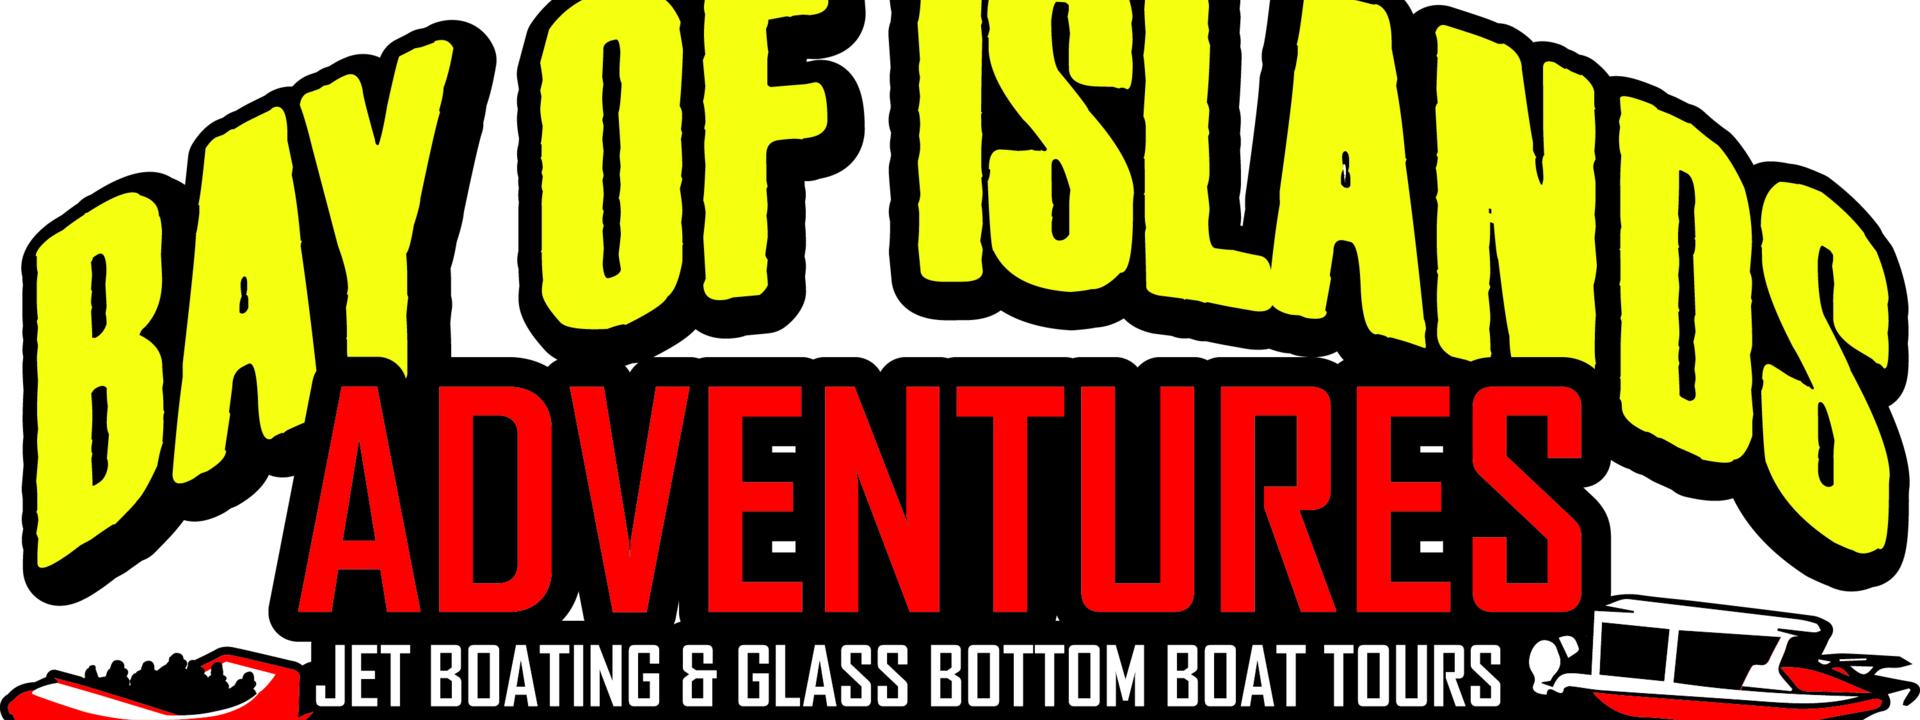 Bay Of Islands - Logo Files.jpg